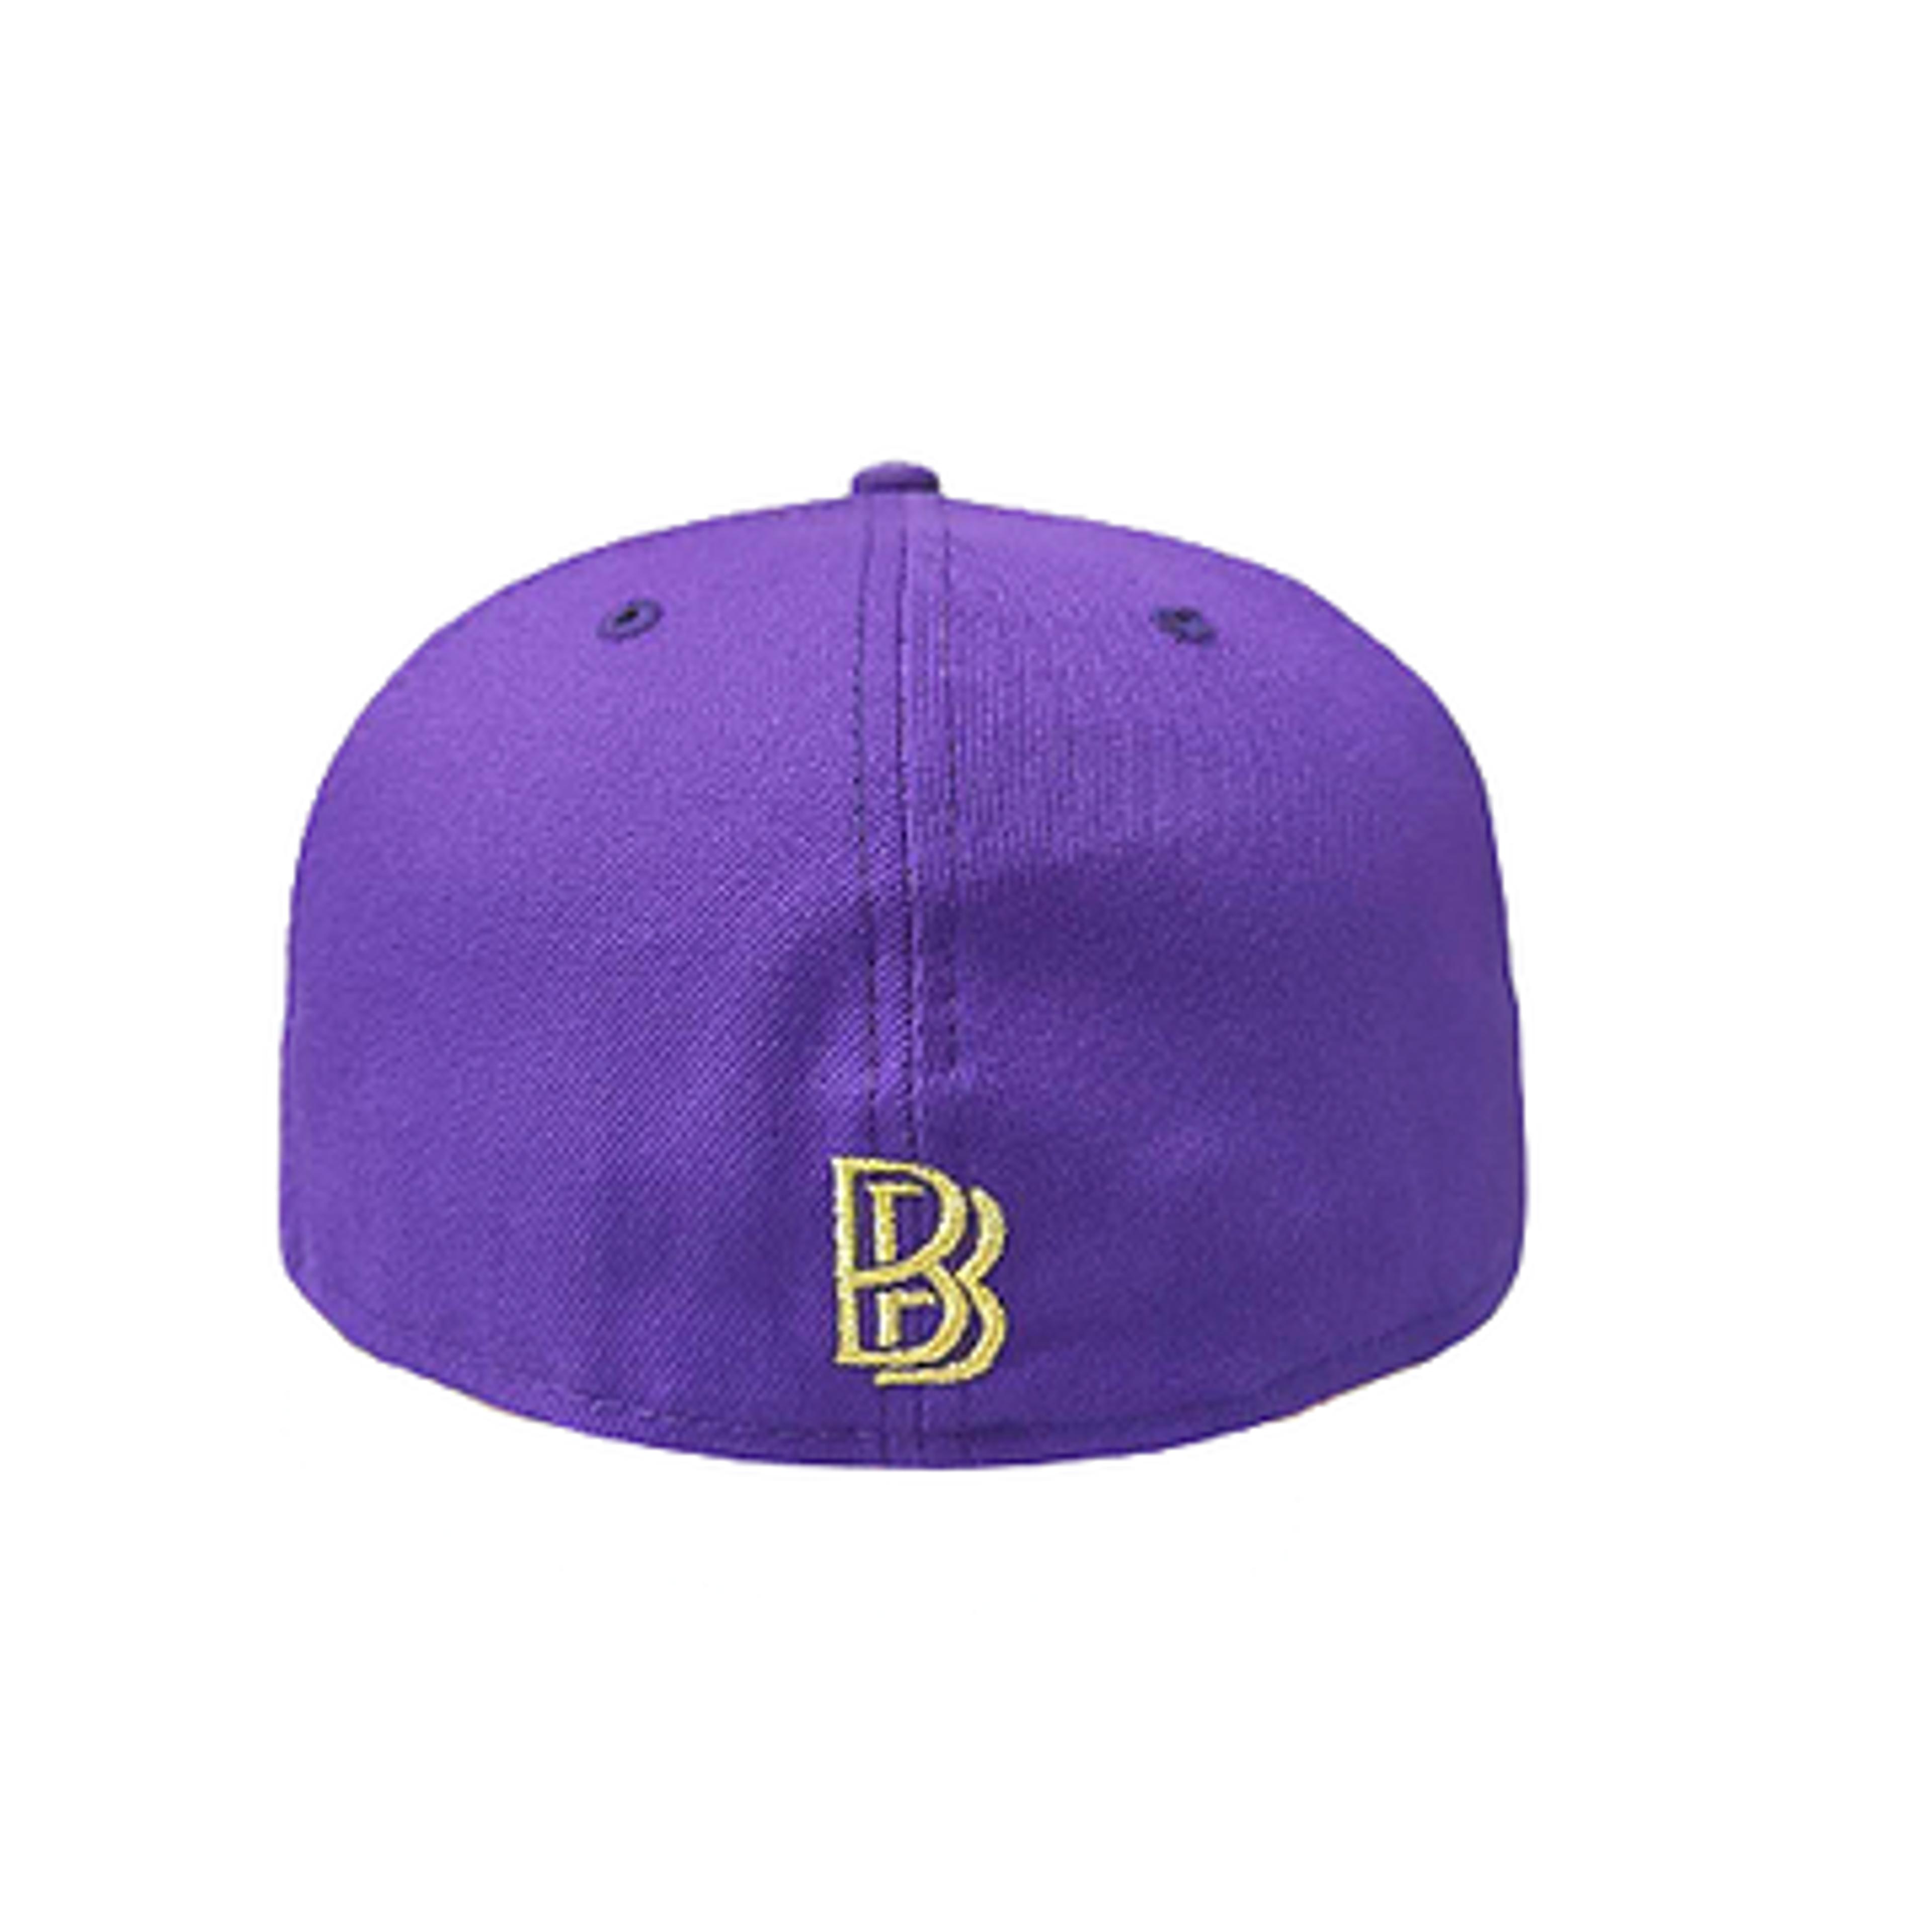 Alternate View 2 of Los Angeles Lakers - Ben Baller 59FIFTY True Purple